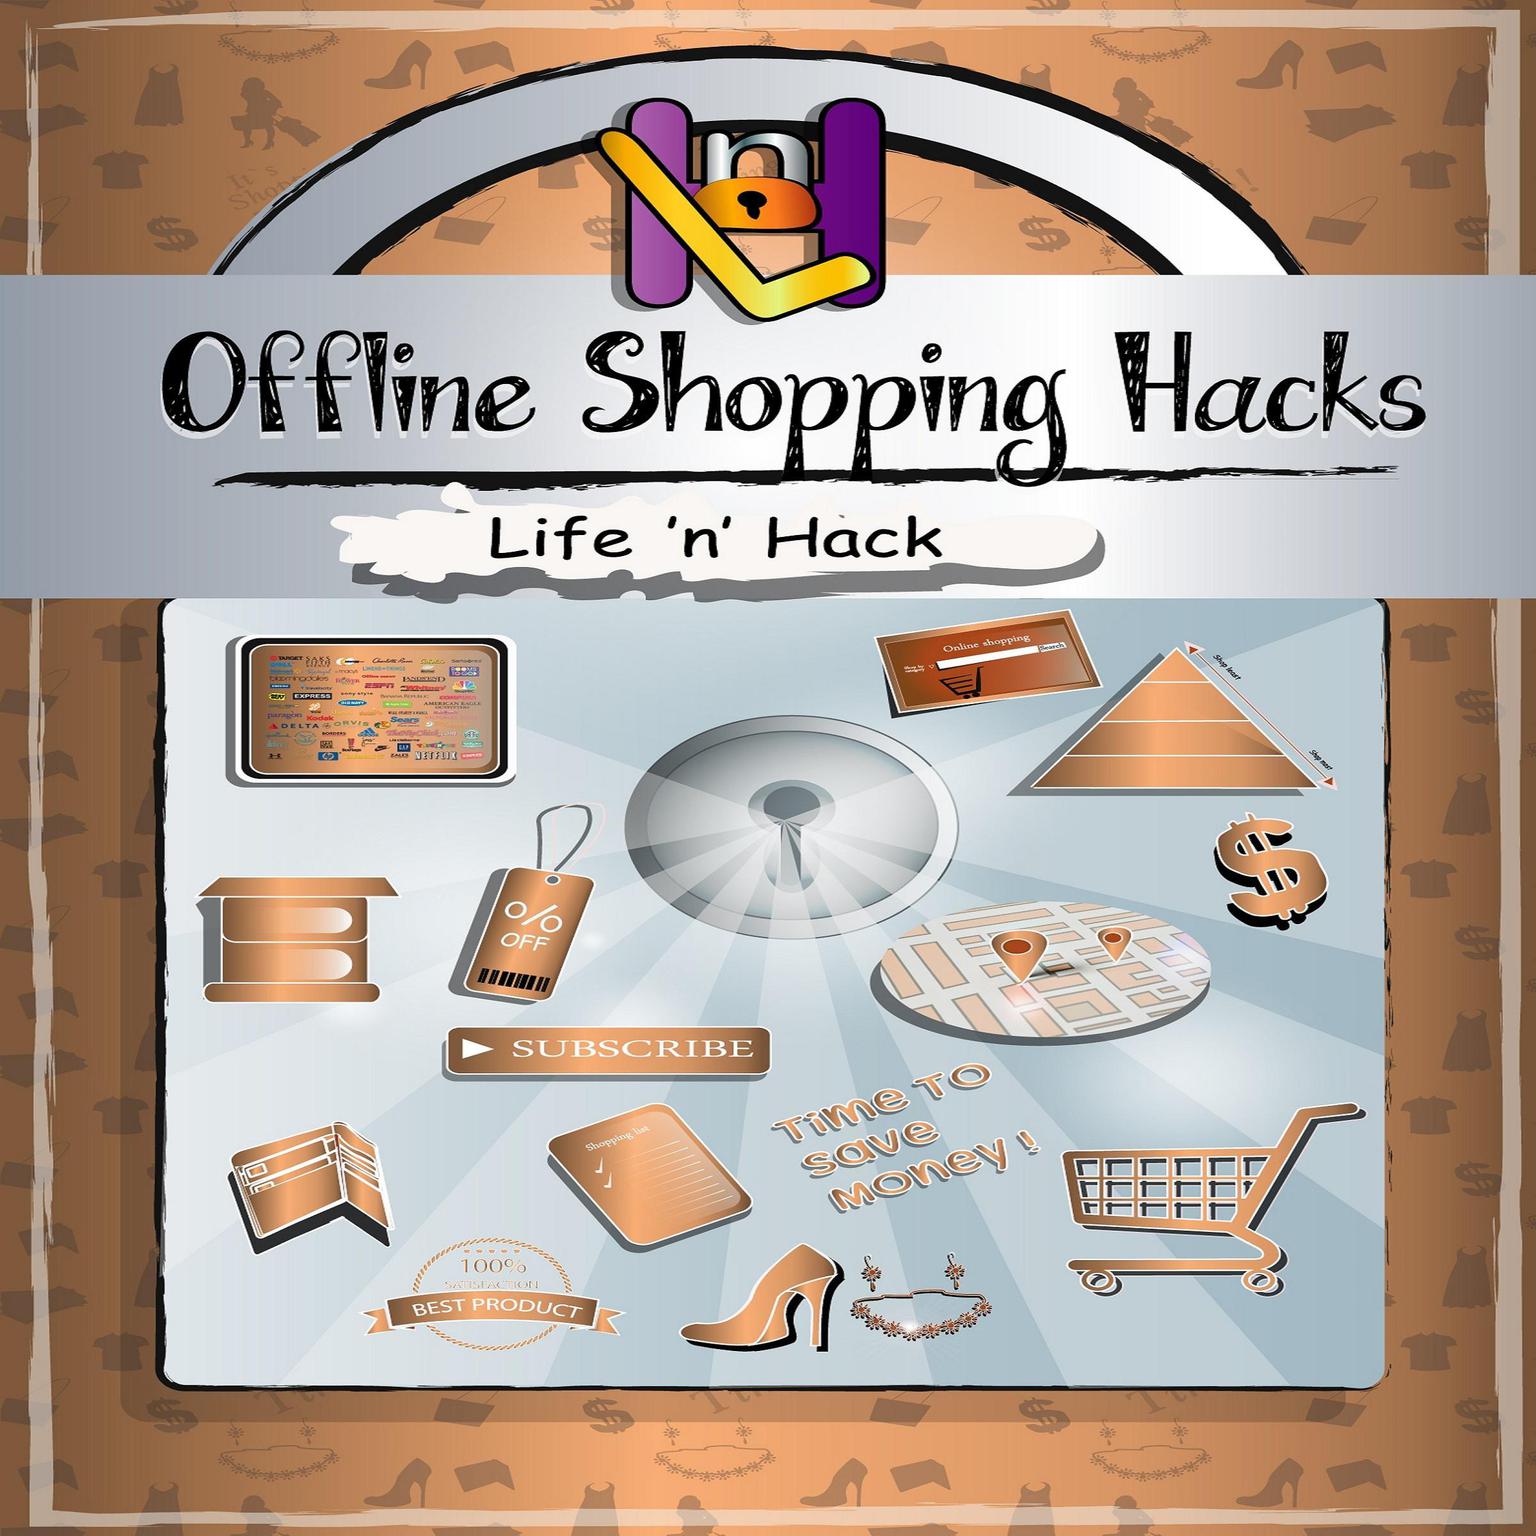 Offline Shopping Hacks: 15 Simple Practical Hacks to Save Money Shopping Offline Audiobook, by Life 'n’ Hack